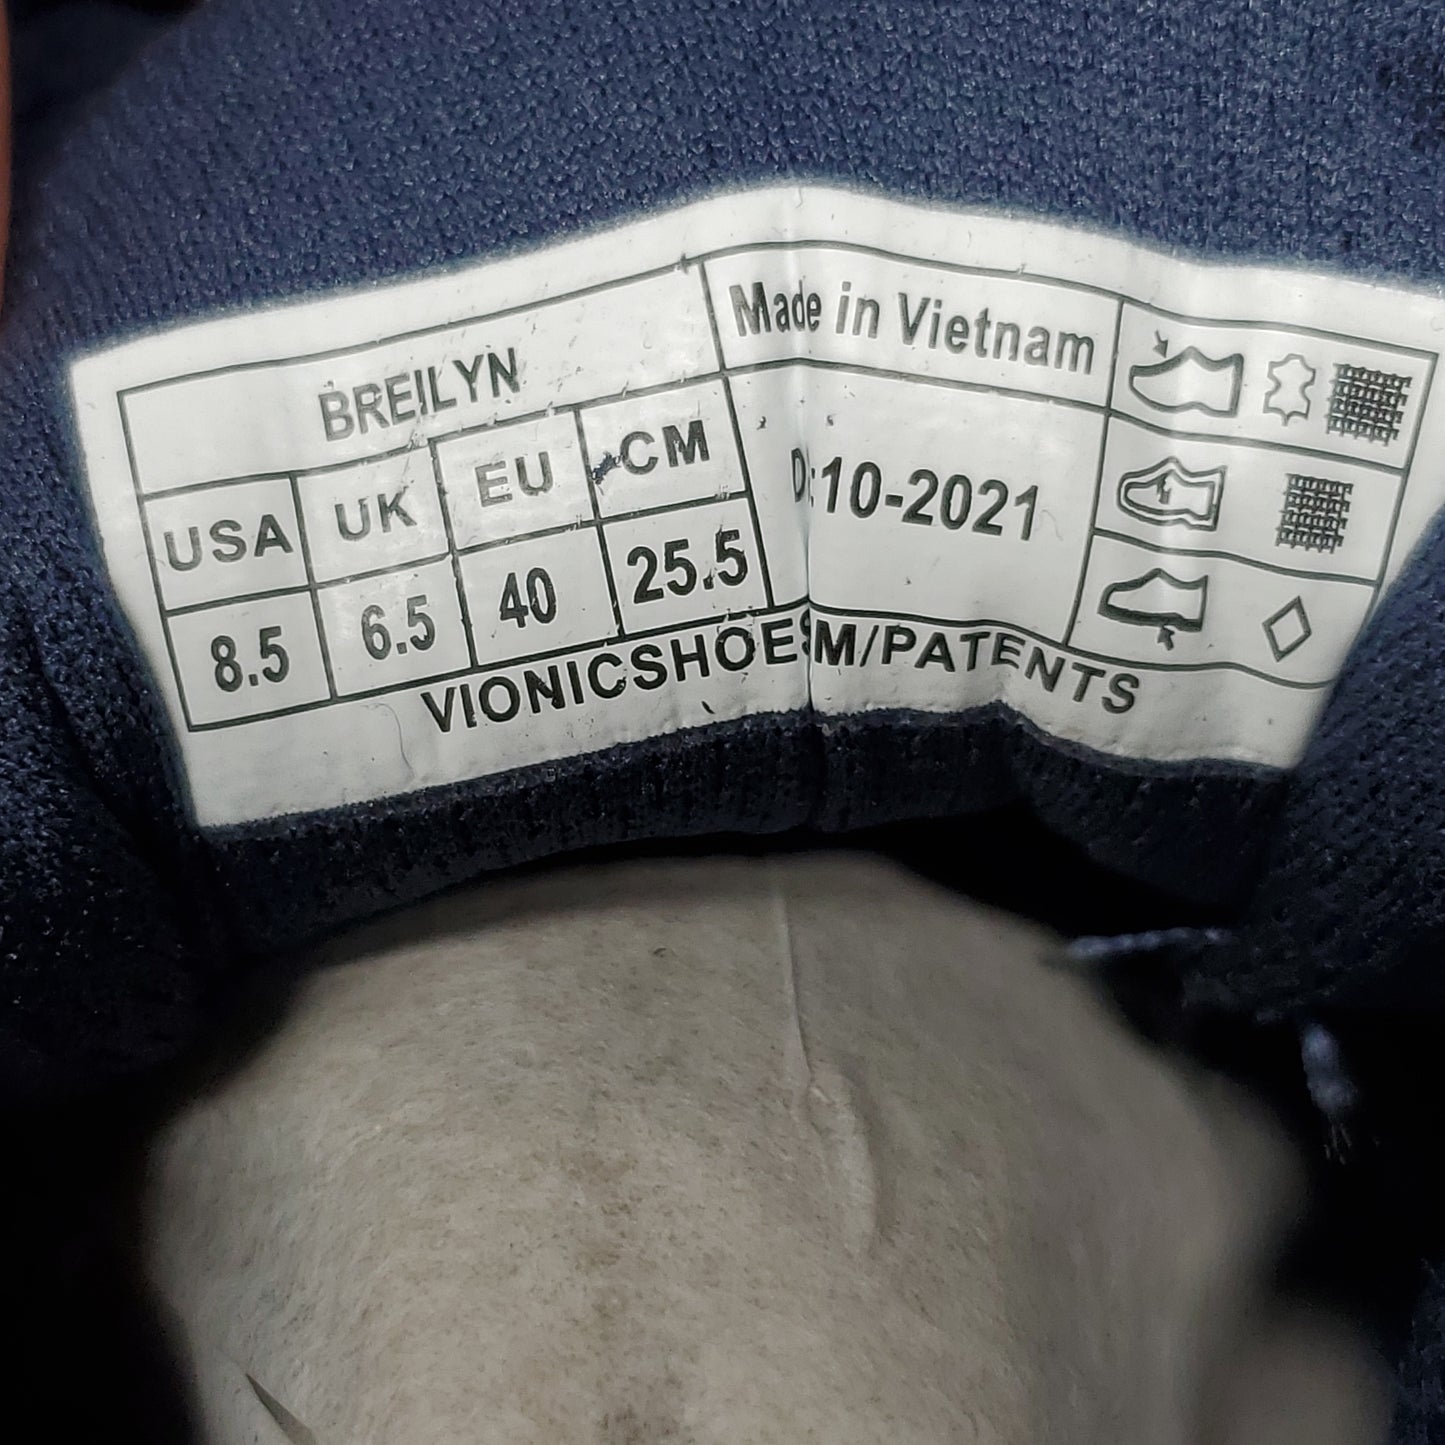 VIONIC Breilyn Satin Sneaker Shoe Women's Sz 8.5 M Navy/White (New)